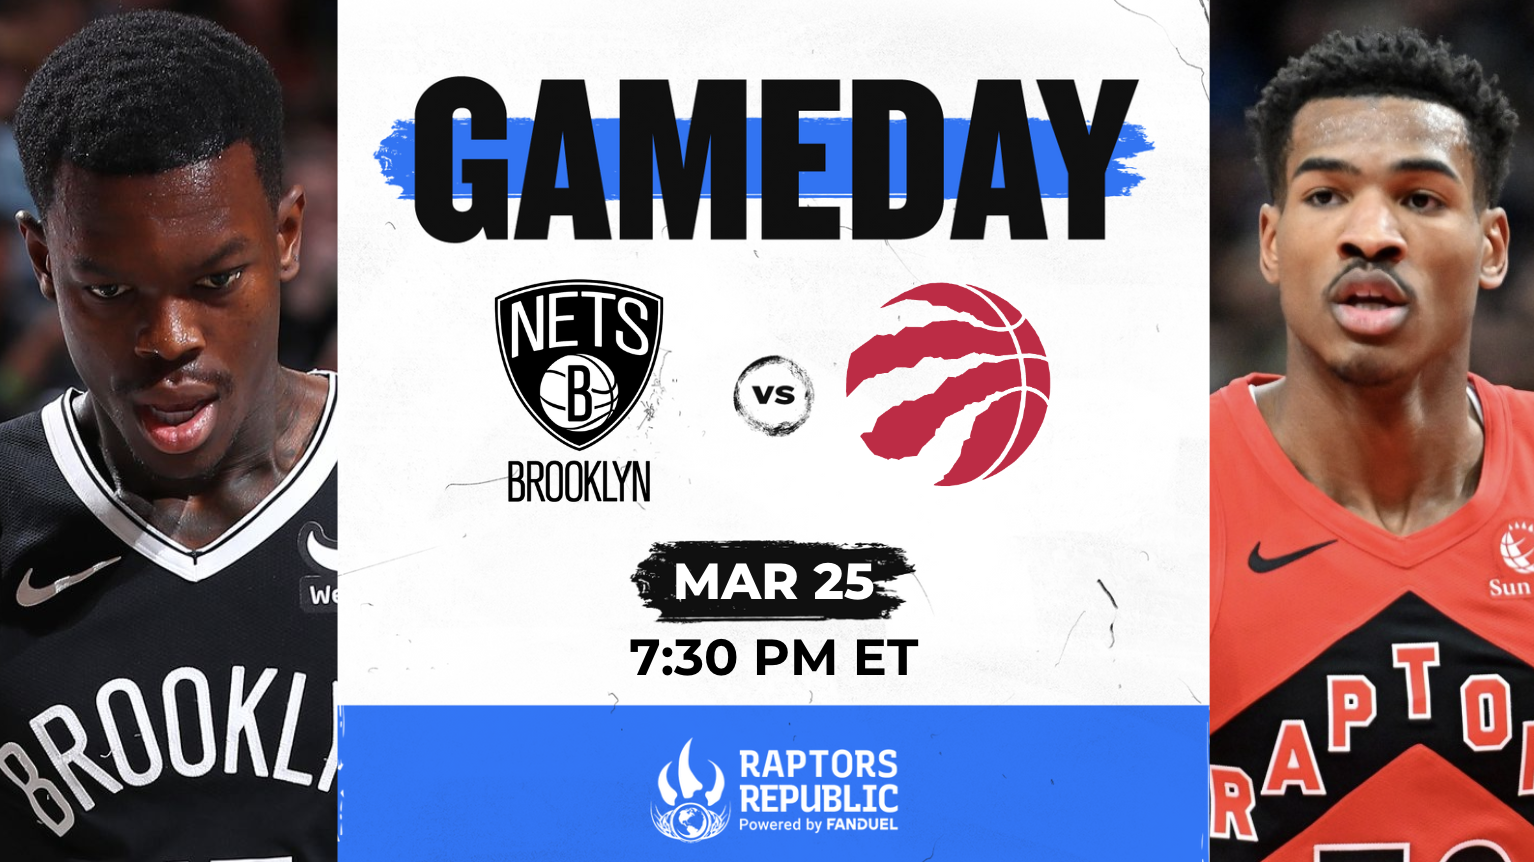 Gameday: Nets @ Raptors, March 25